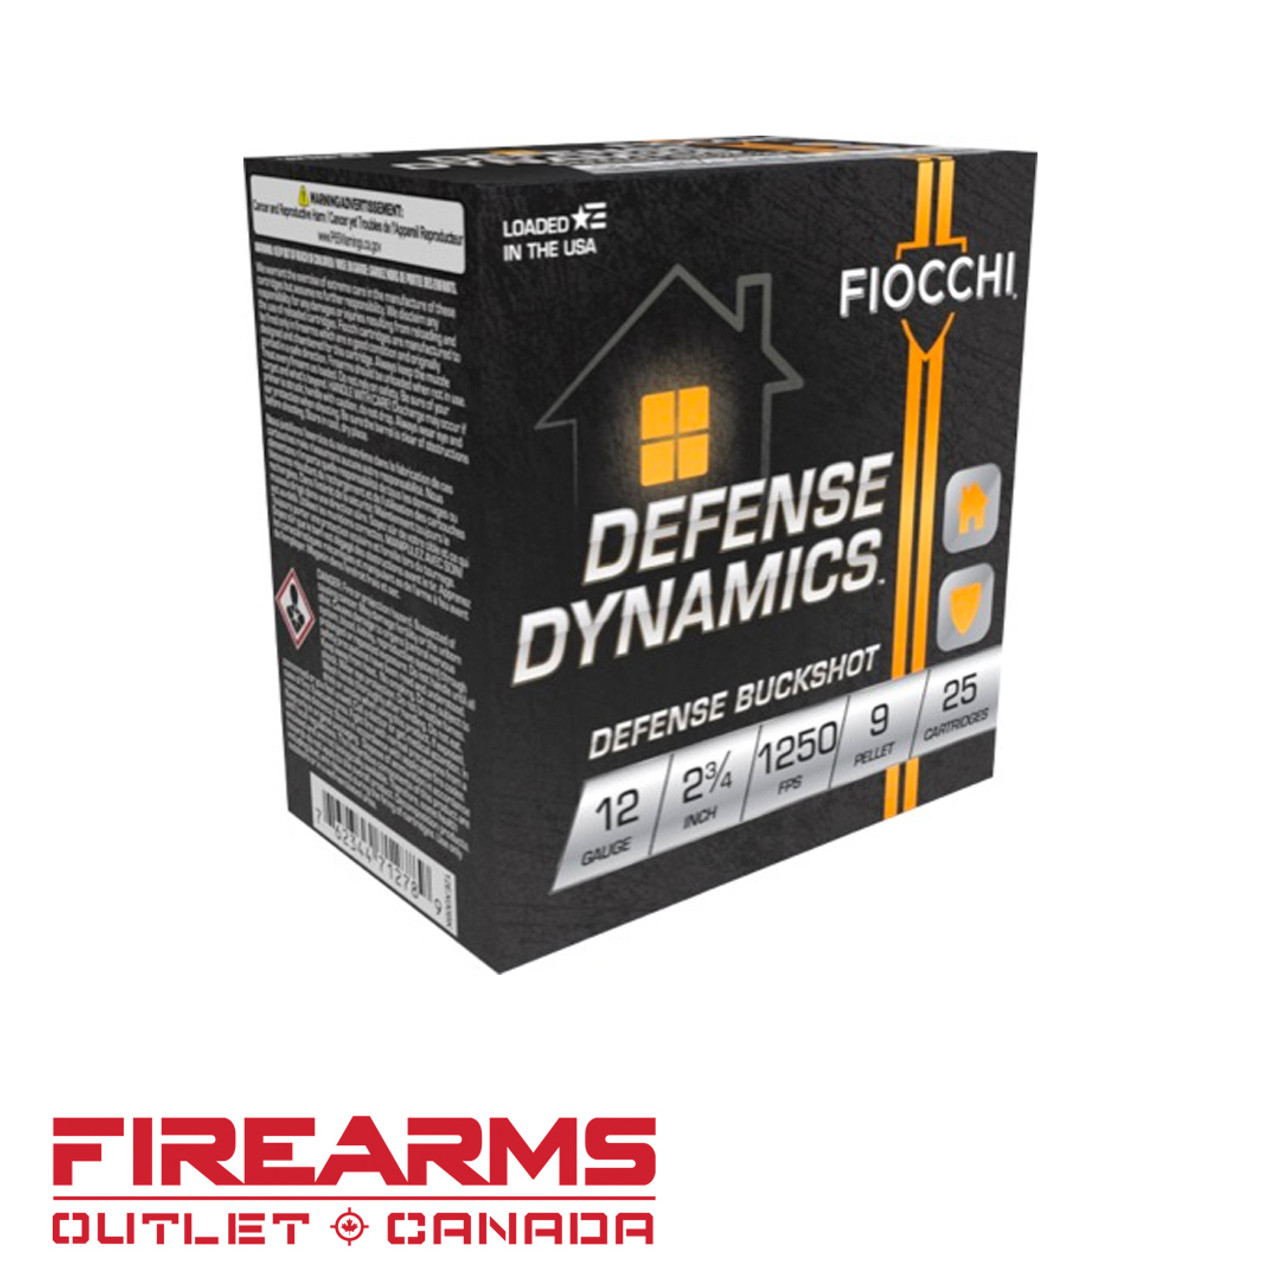 Fiocchi Defense Dynamics Ammunition - 12GA, 2-3/4", 00 Buck, 9 Pellet, Box of 25 [12EX00BK]